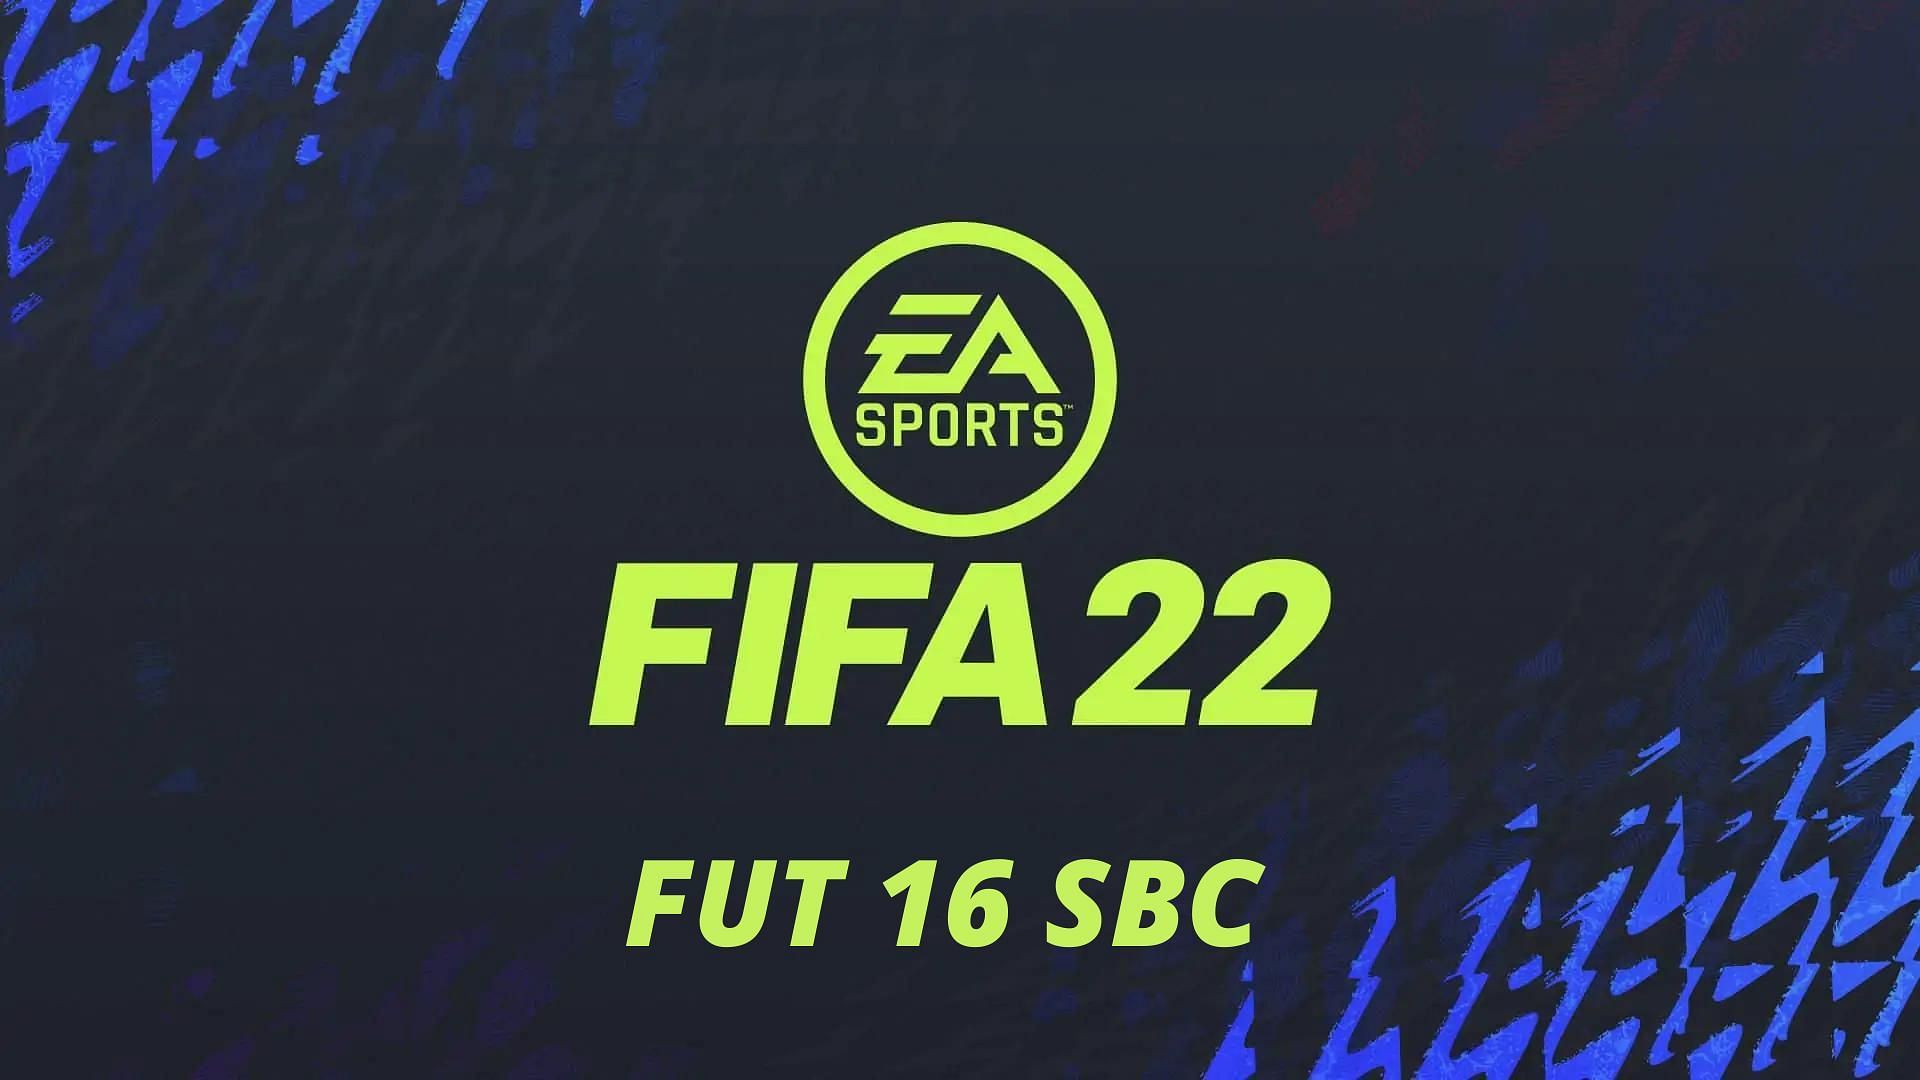 FUT 16 SBC is now live in FIFA 22 Ultimate Team (Image via Sportskeeda)